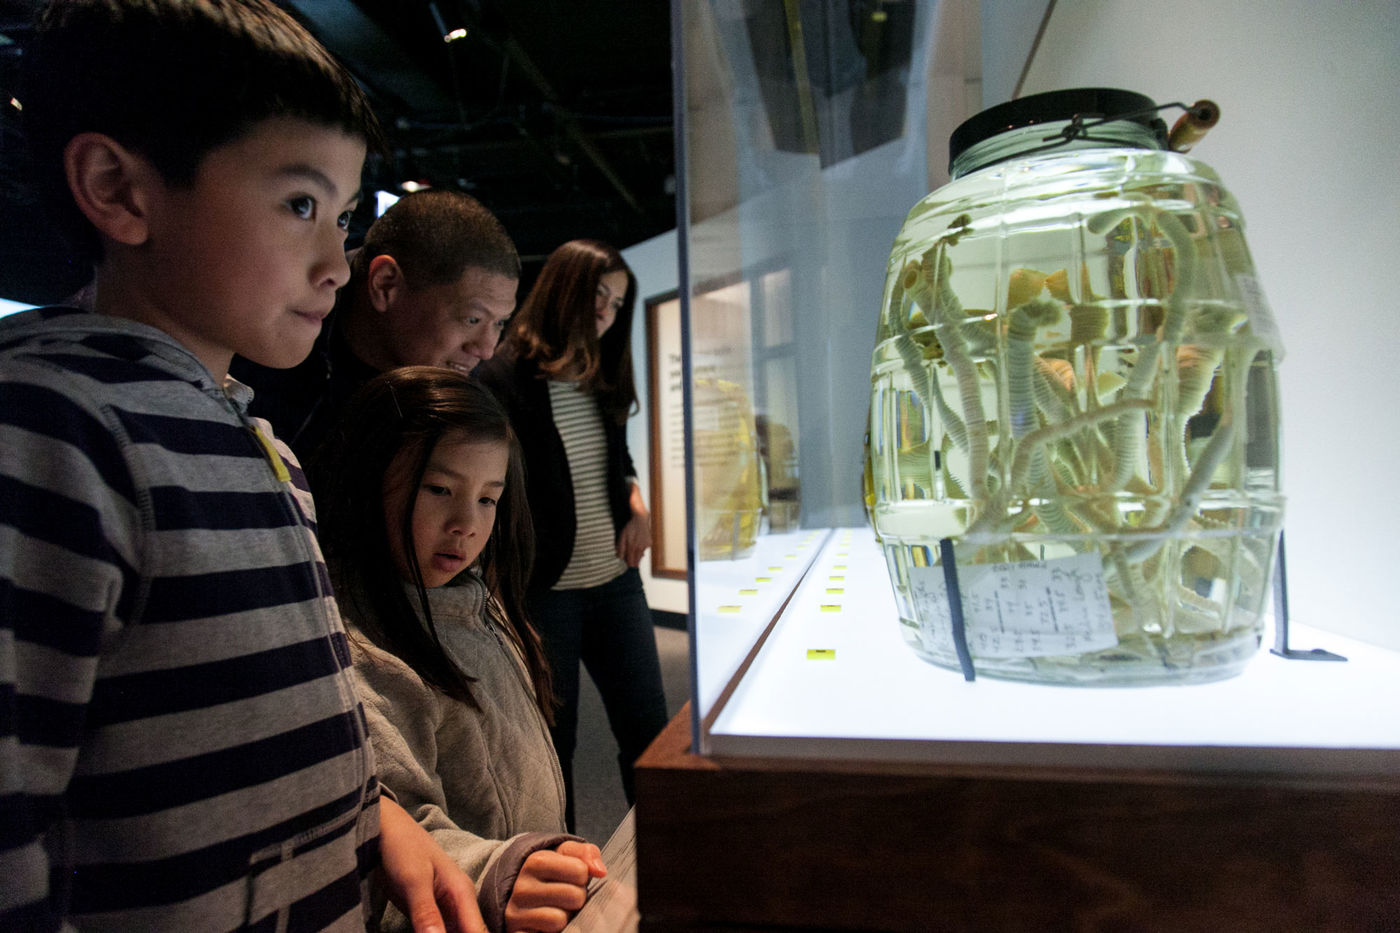 children looking at a lit specimen jar